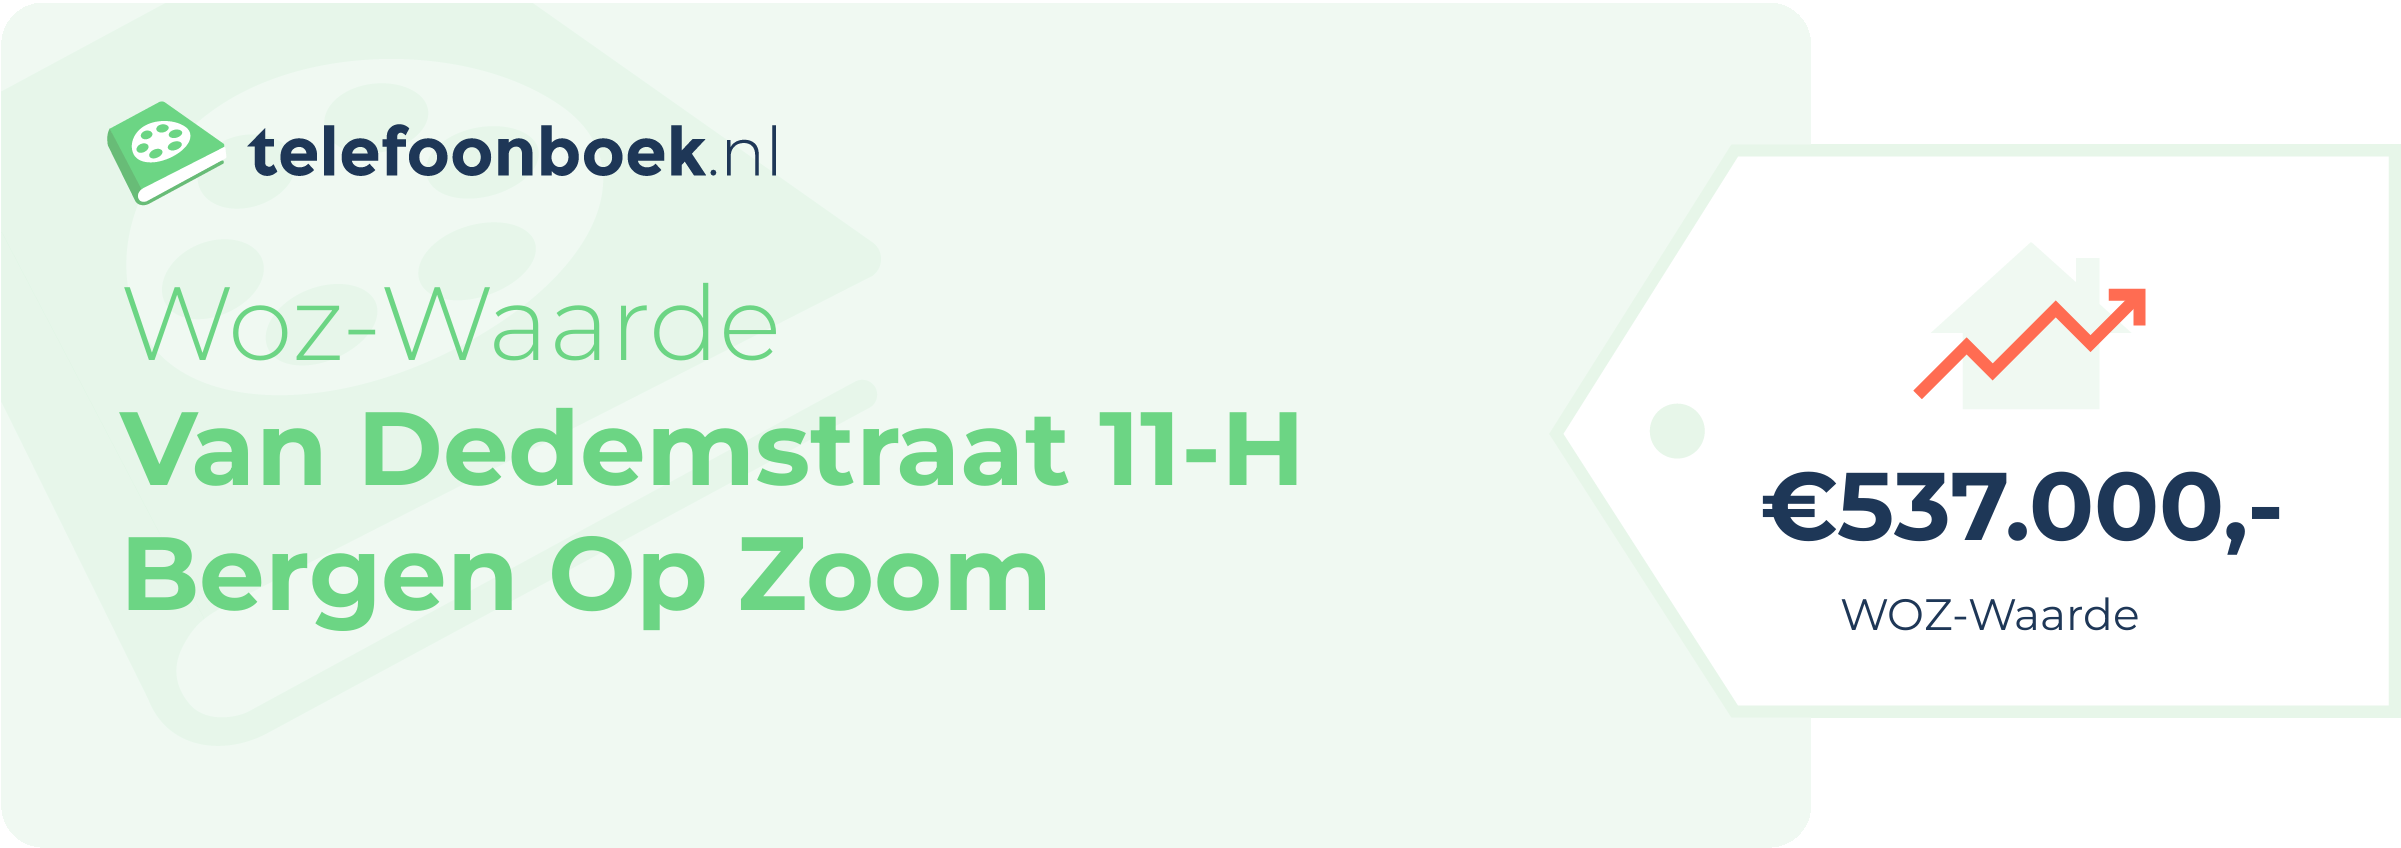 WOZ-waarde Van Dedemstraat 11-H Bergen Op Zoom